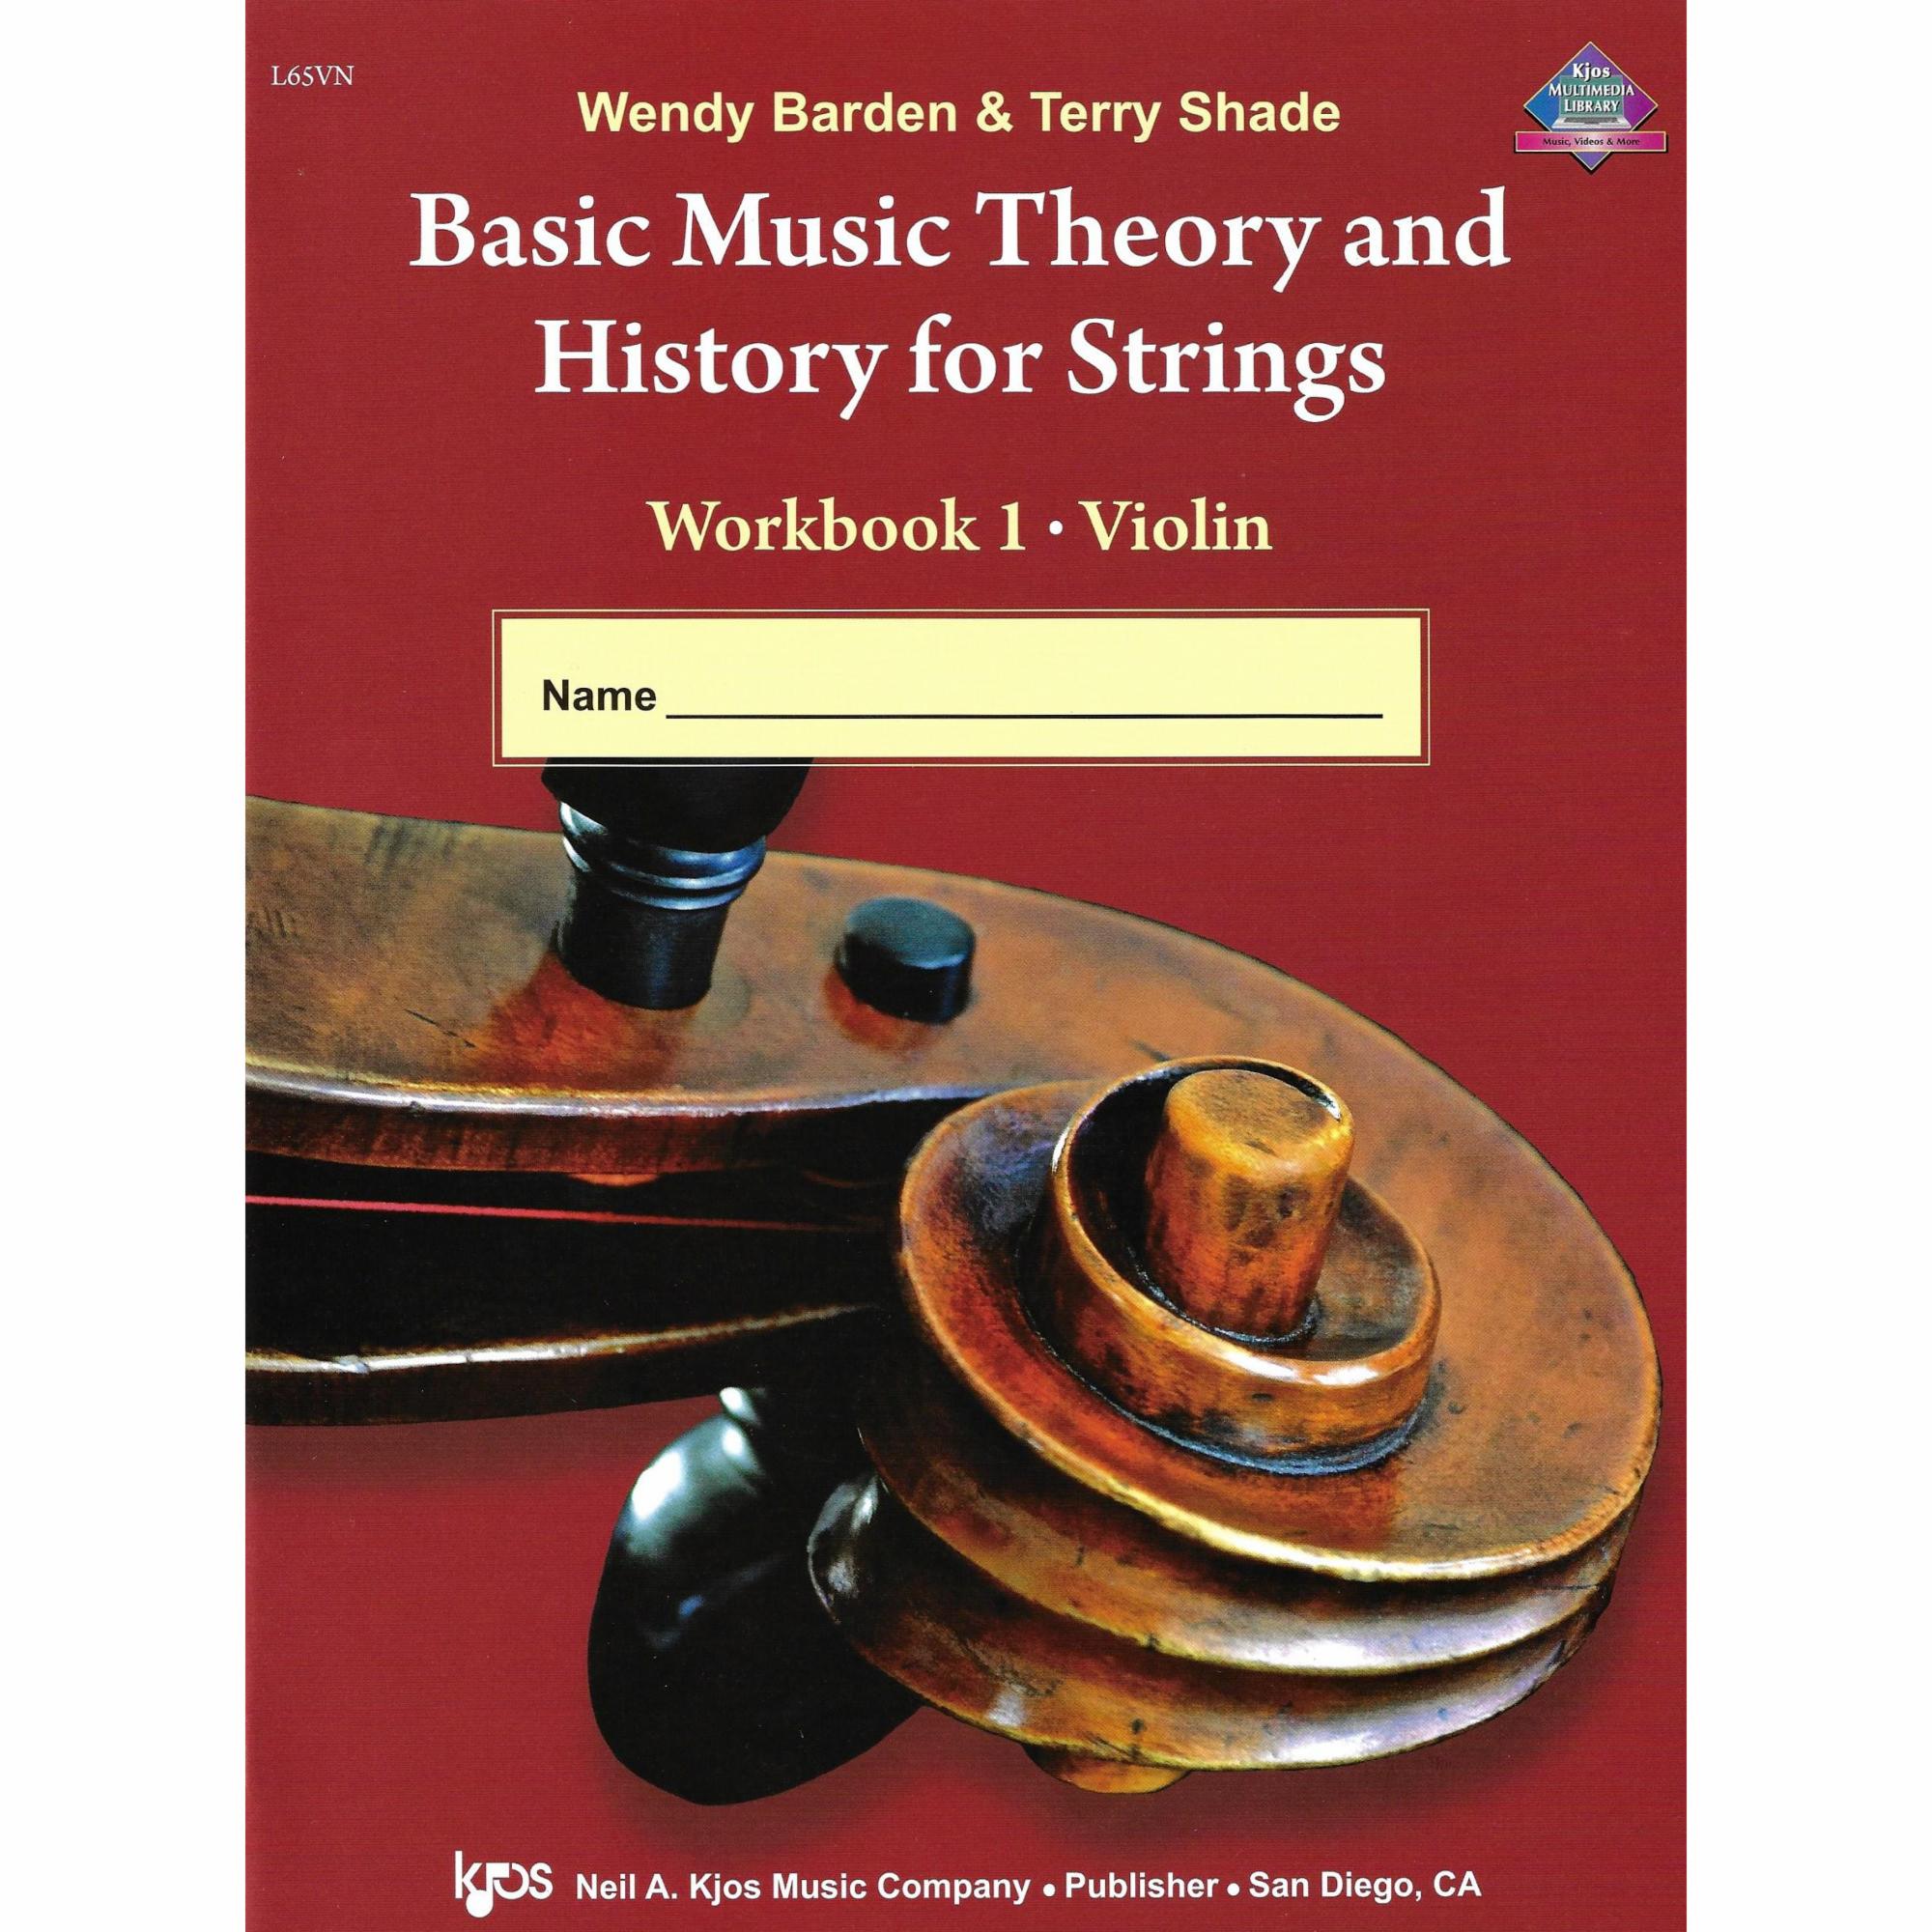 Basic Music Theory and History, Workbook 1